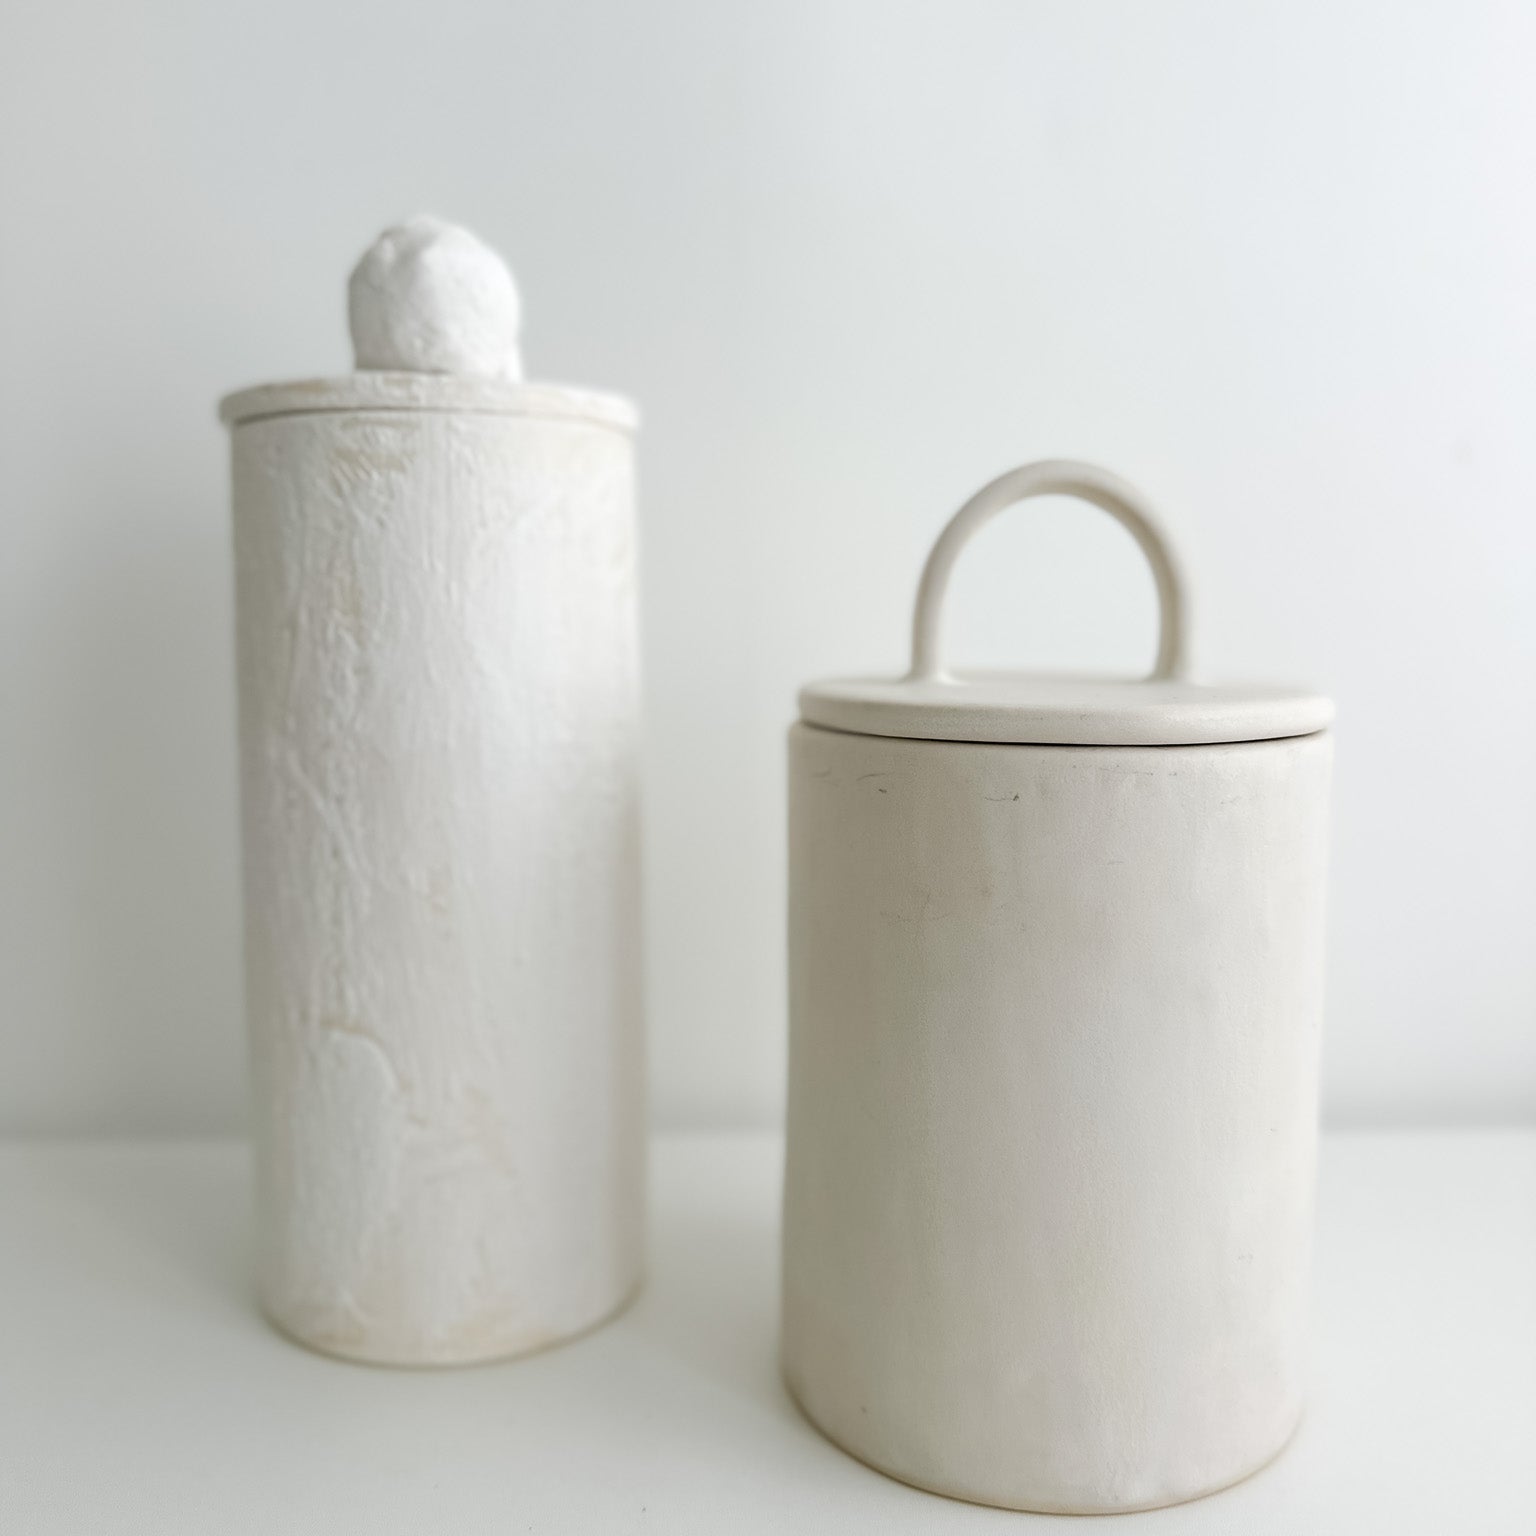 Handmade ceramic storage canisters for kitchen organization